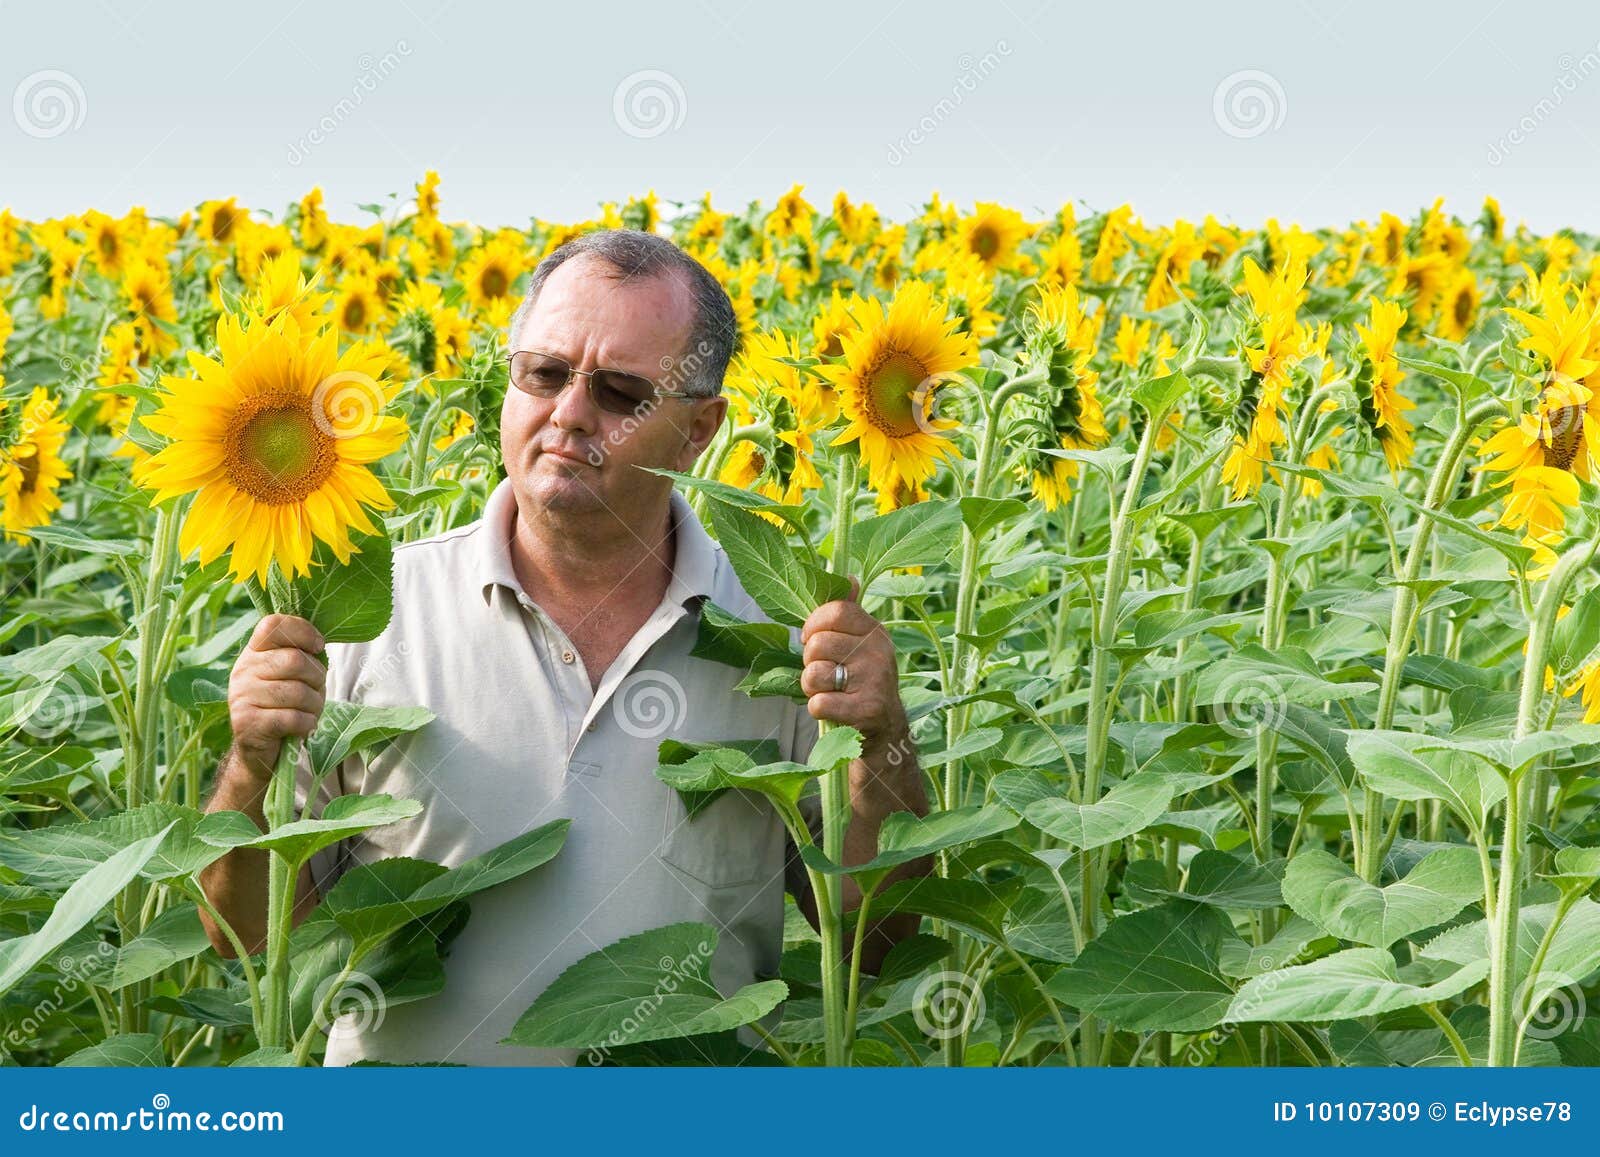 farmer on a sun flower field